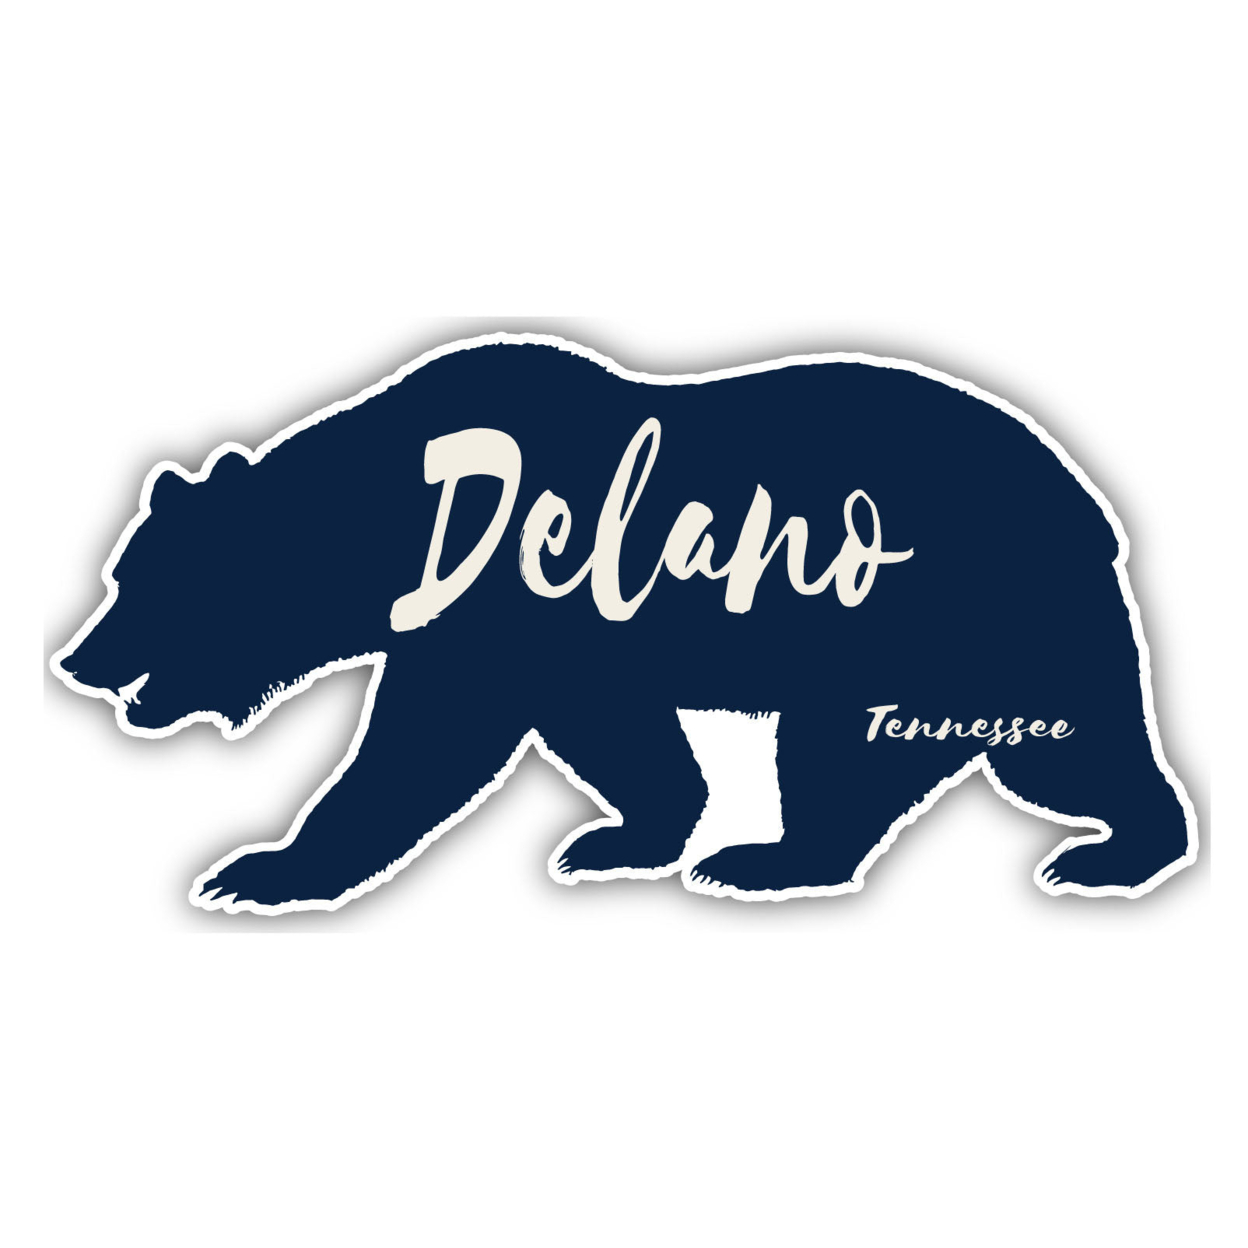 Delano Tennessee Souvenir Decorative Stickers (Choose Theme And Size) - Single Unit, 8-Inch, Bear